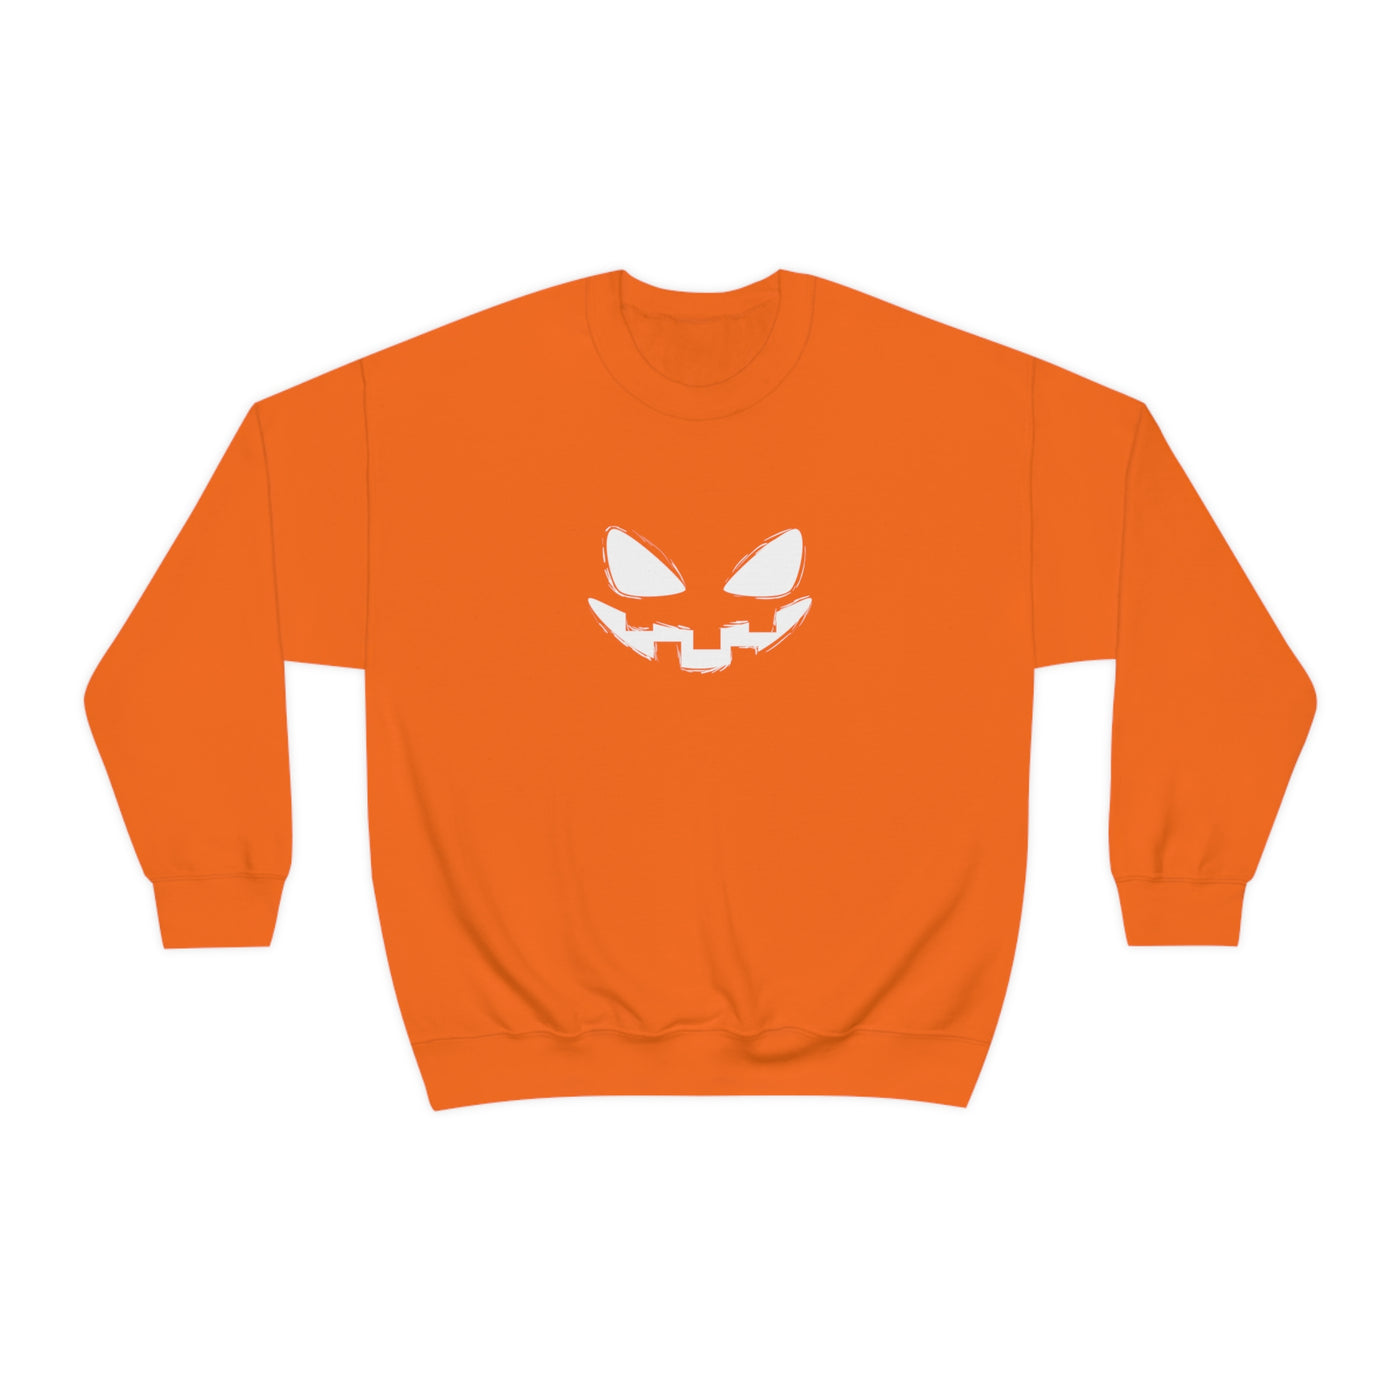 Scary Pumpkin Face Crewneck Sweatshirt